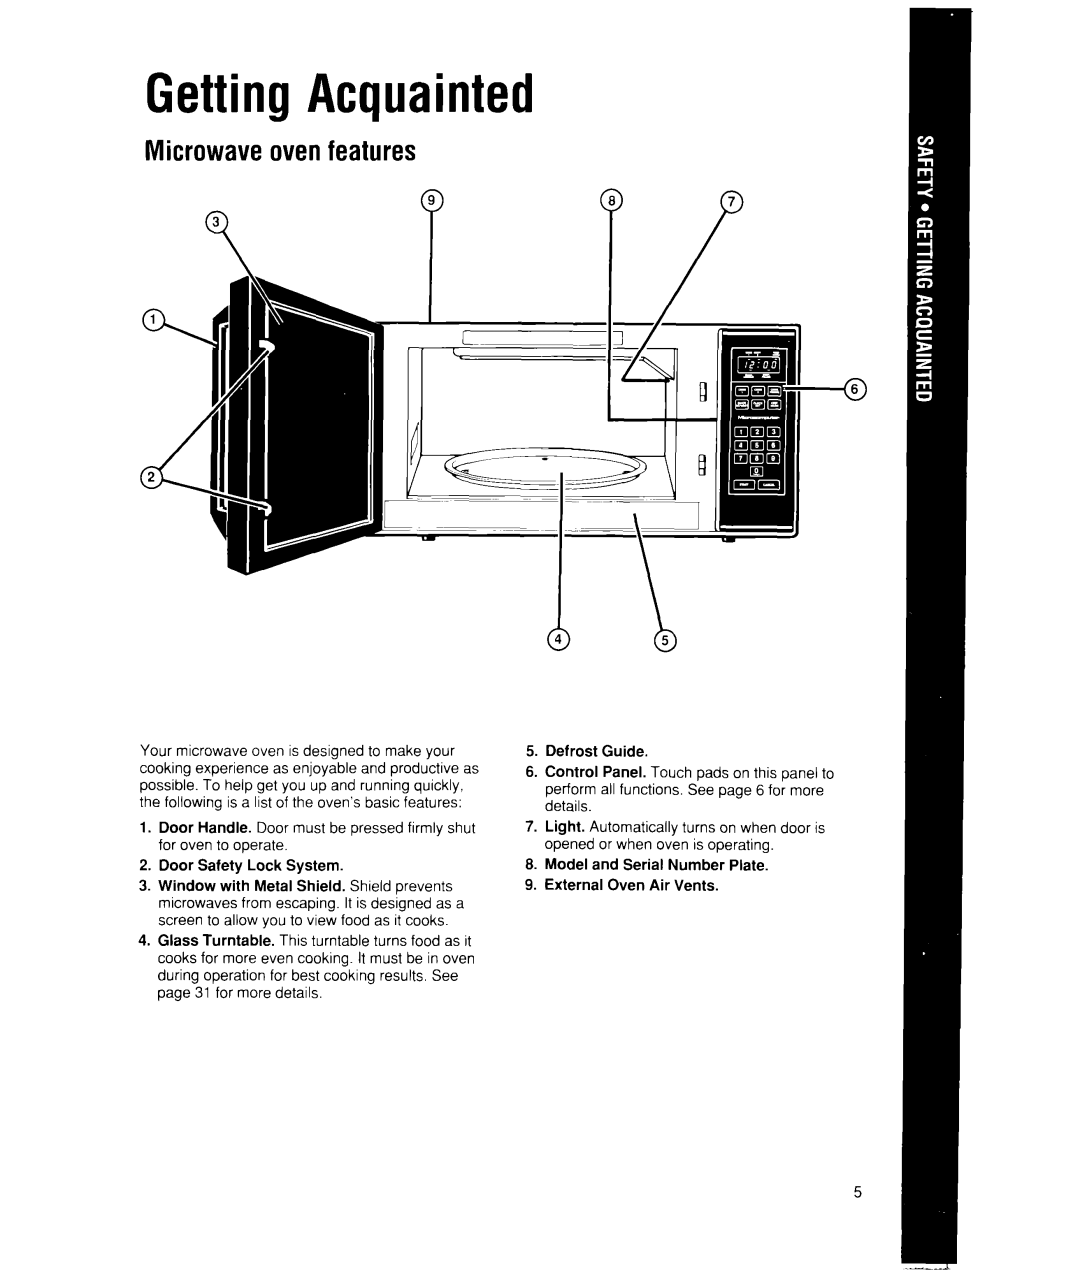 Whirlpool MW7400XW manual GettingAcquainted, Microwave oven features 